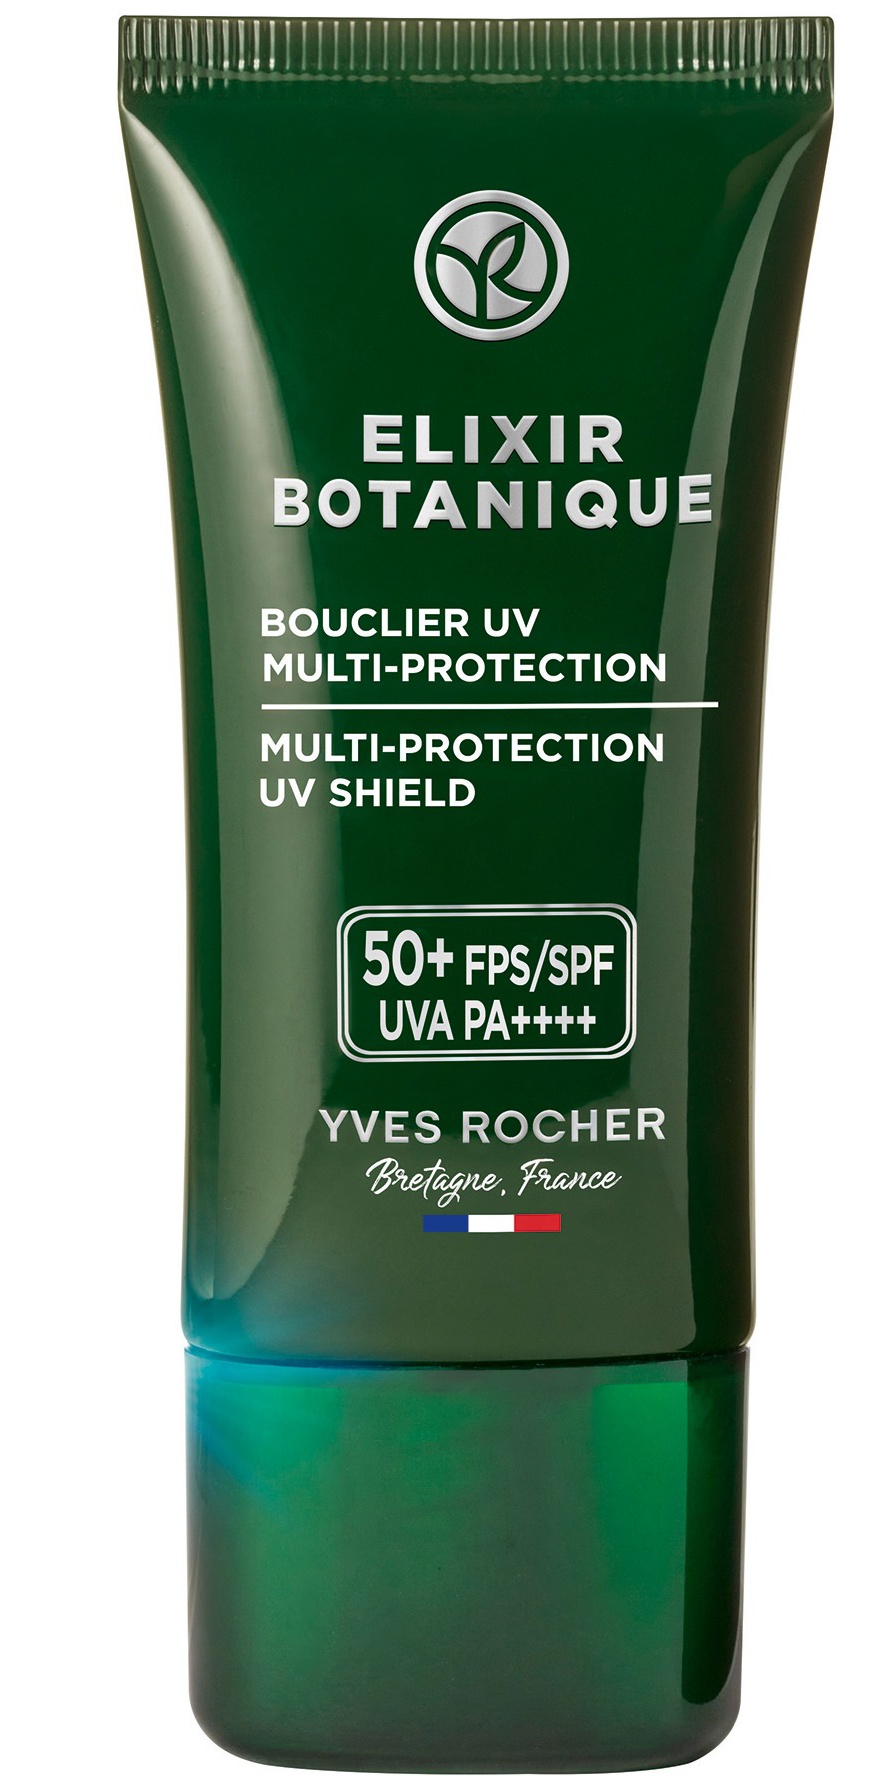 Yves Rocher Elixir Botanique SPF50